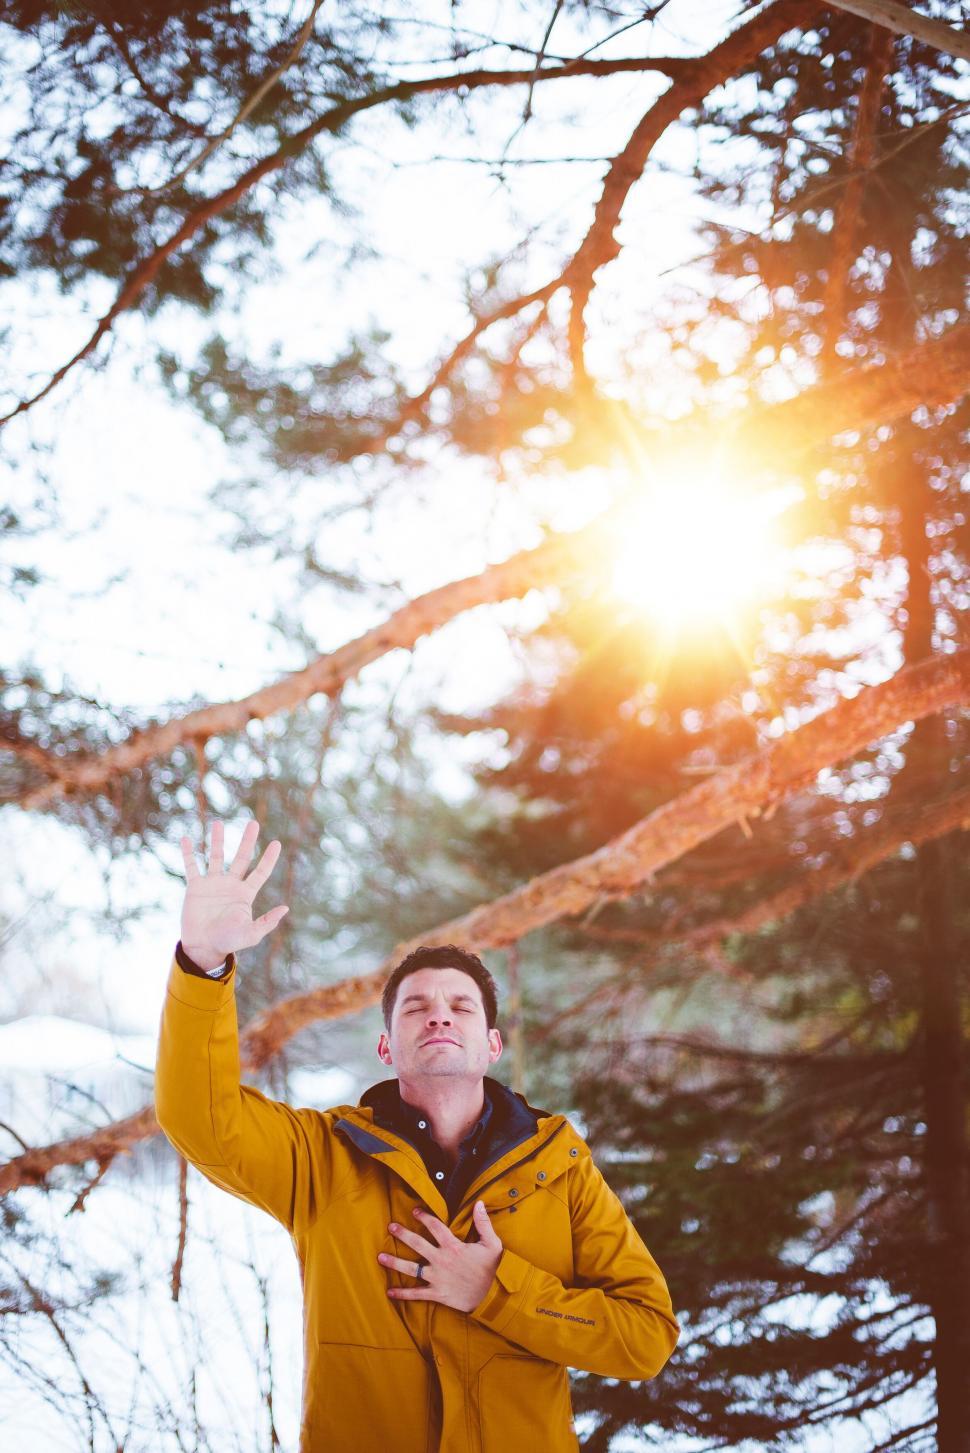 Free Image of Man enjoying sun in winter forest 